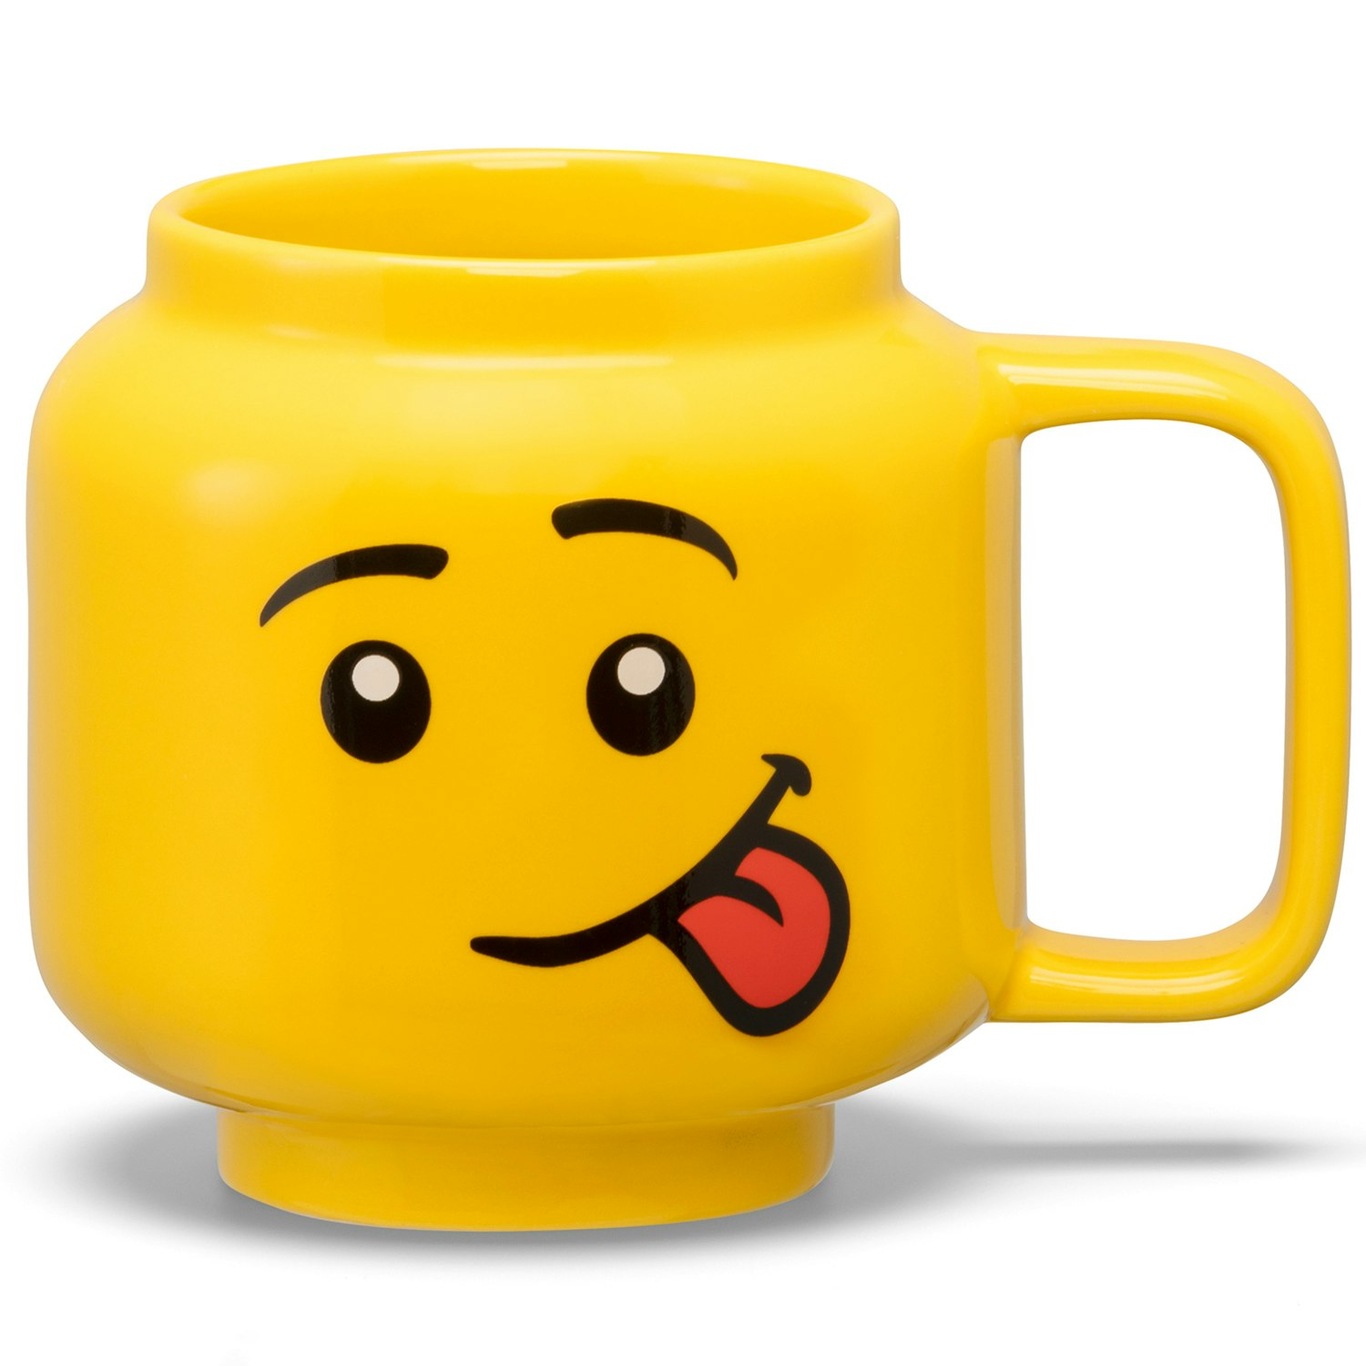 LEGO Ceramic Mug Small Boy Muki Keltainen, L